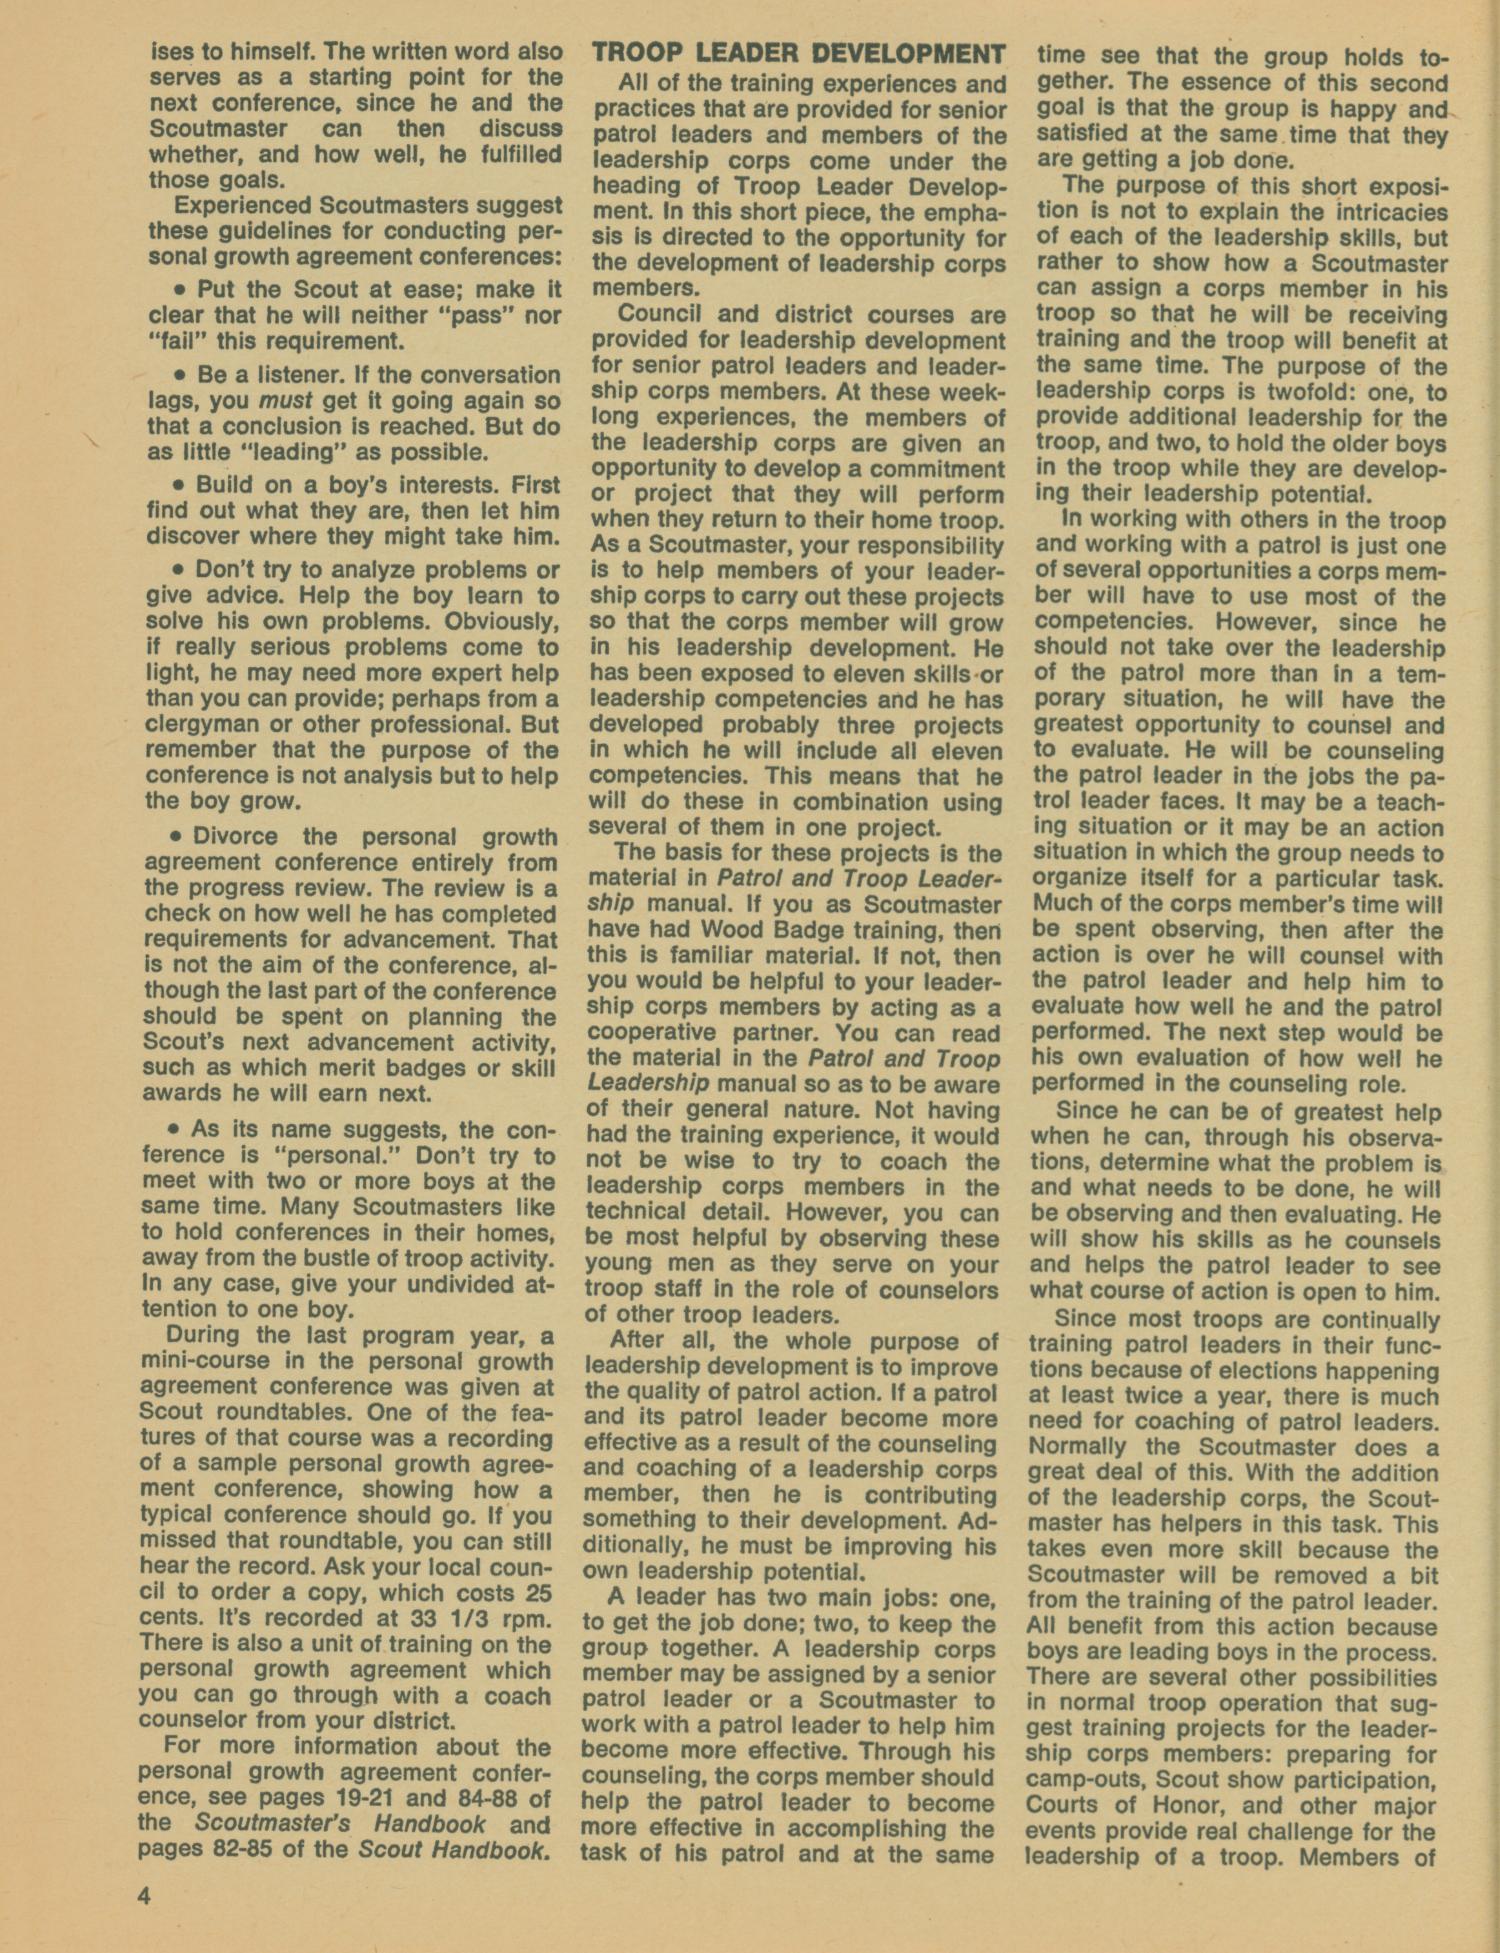 Scouting, Volume 61, Number [6], September 1973
                                                
                                                    4
                                                